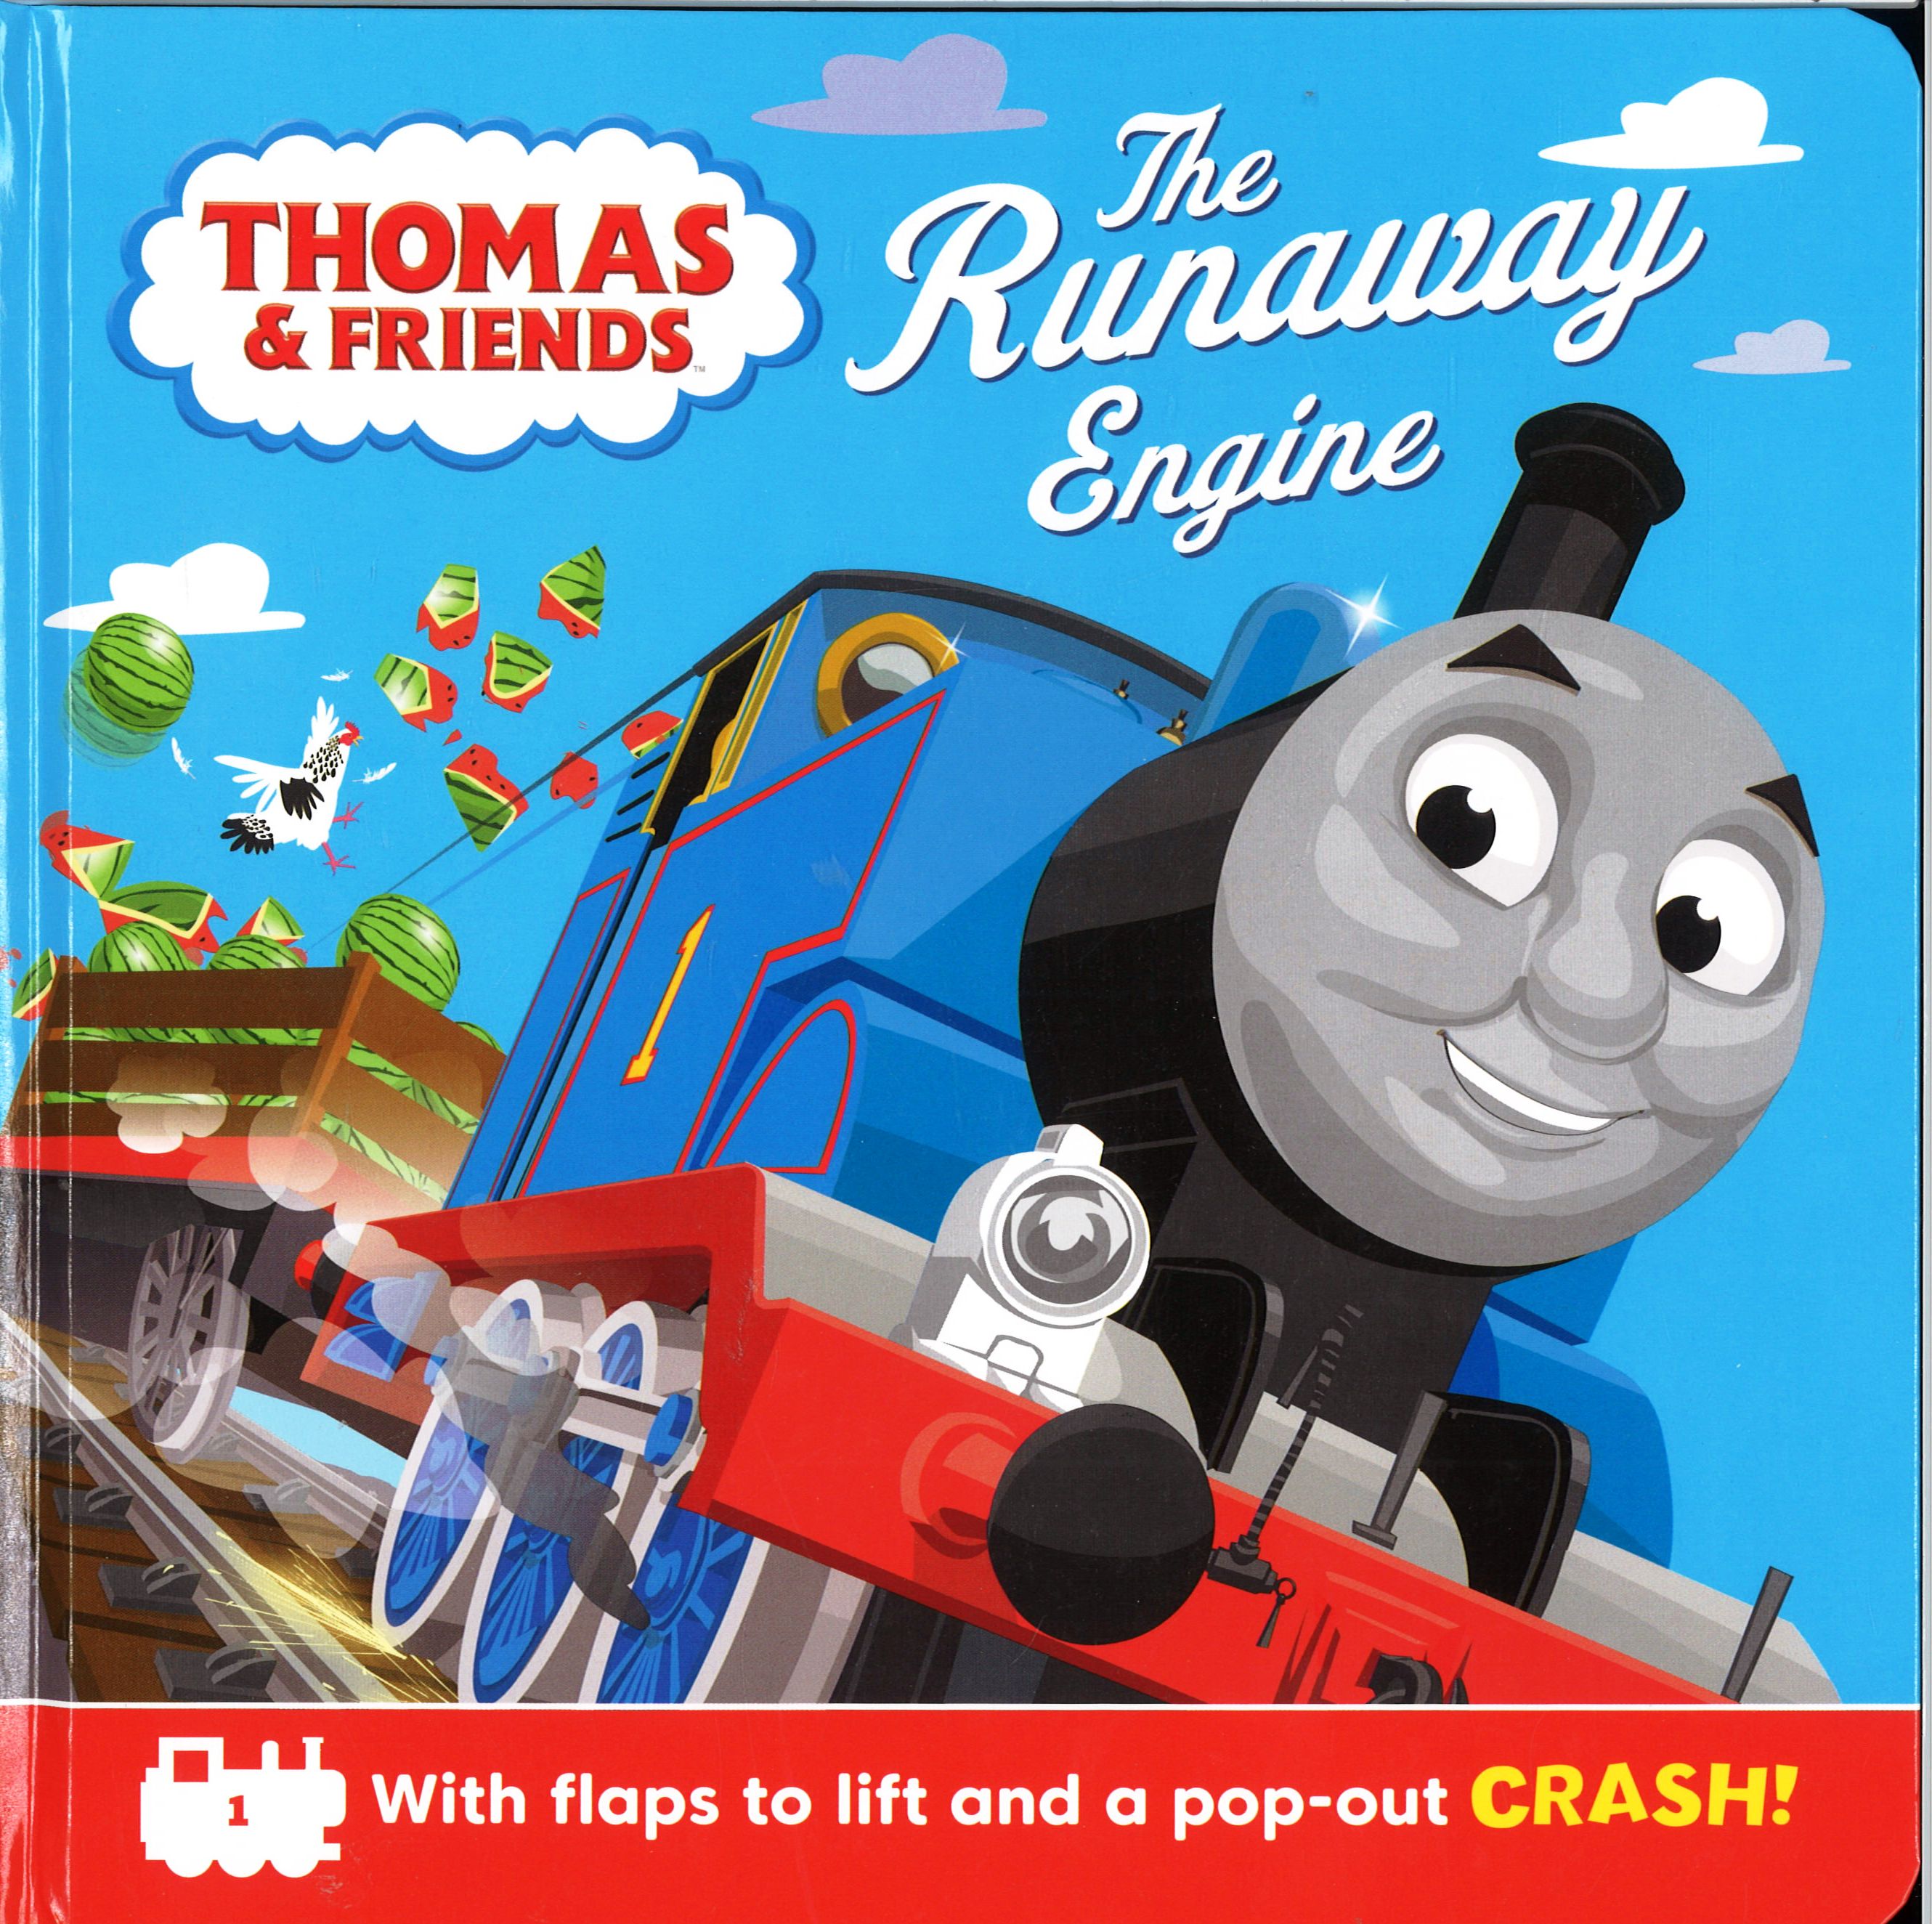 Thomas & Friends - The Runaway Engine Allbooks Portlaoise | Buy School ...